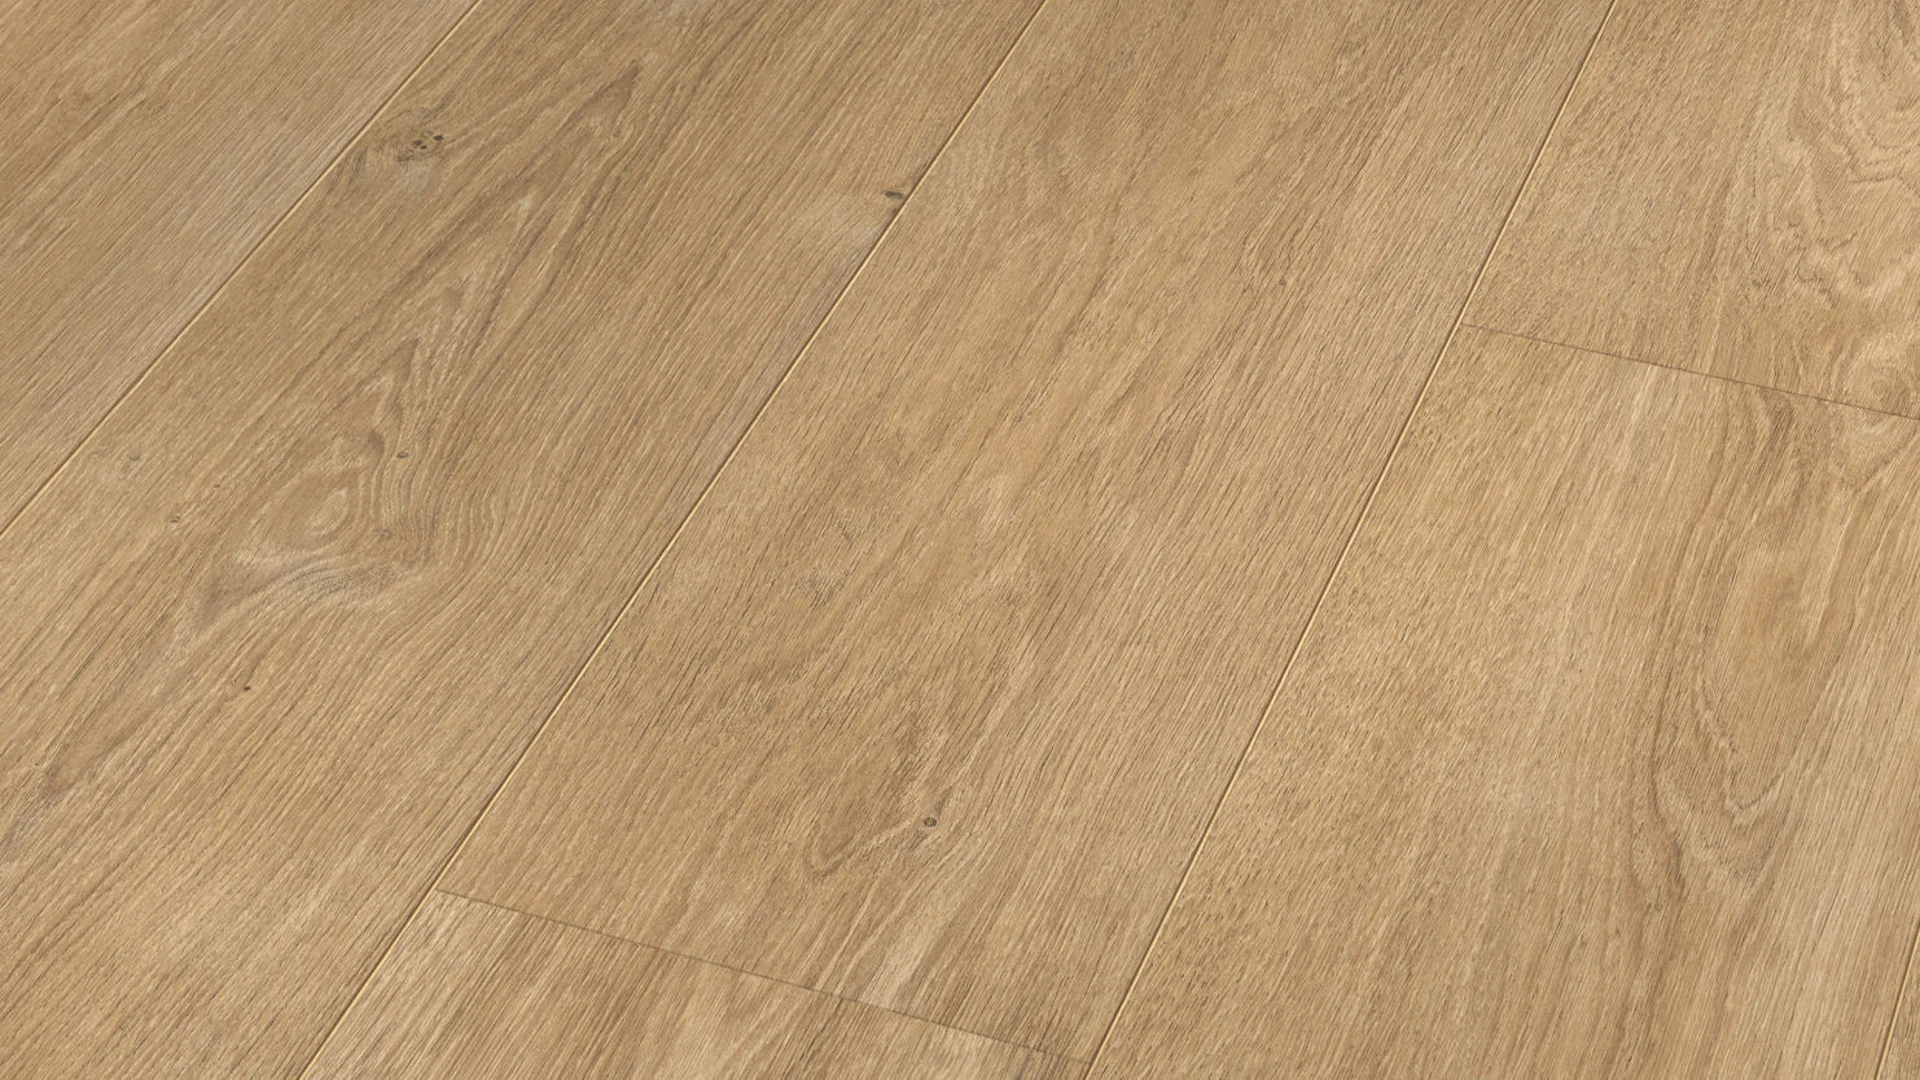 MEISTER Laminate flooring - MeisterDesign LL 250 Oak toffee 6275